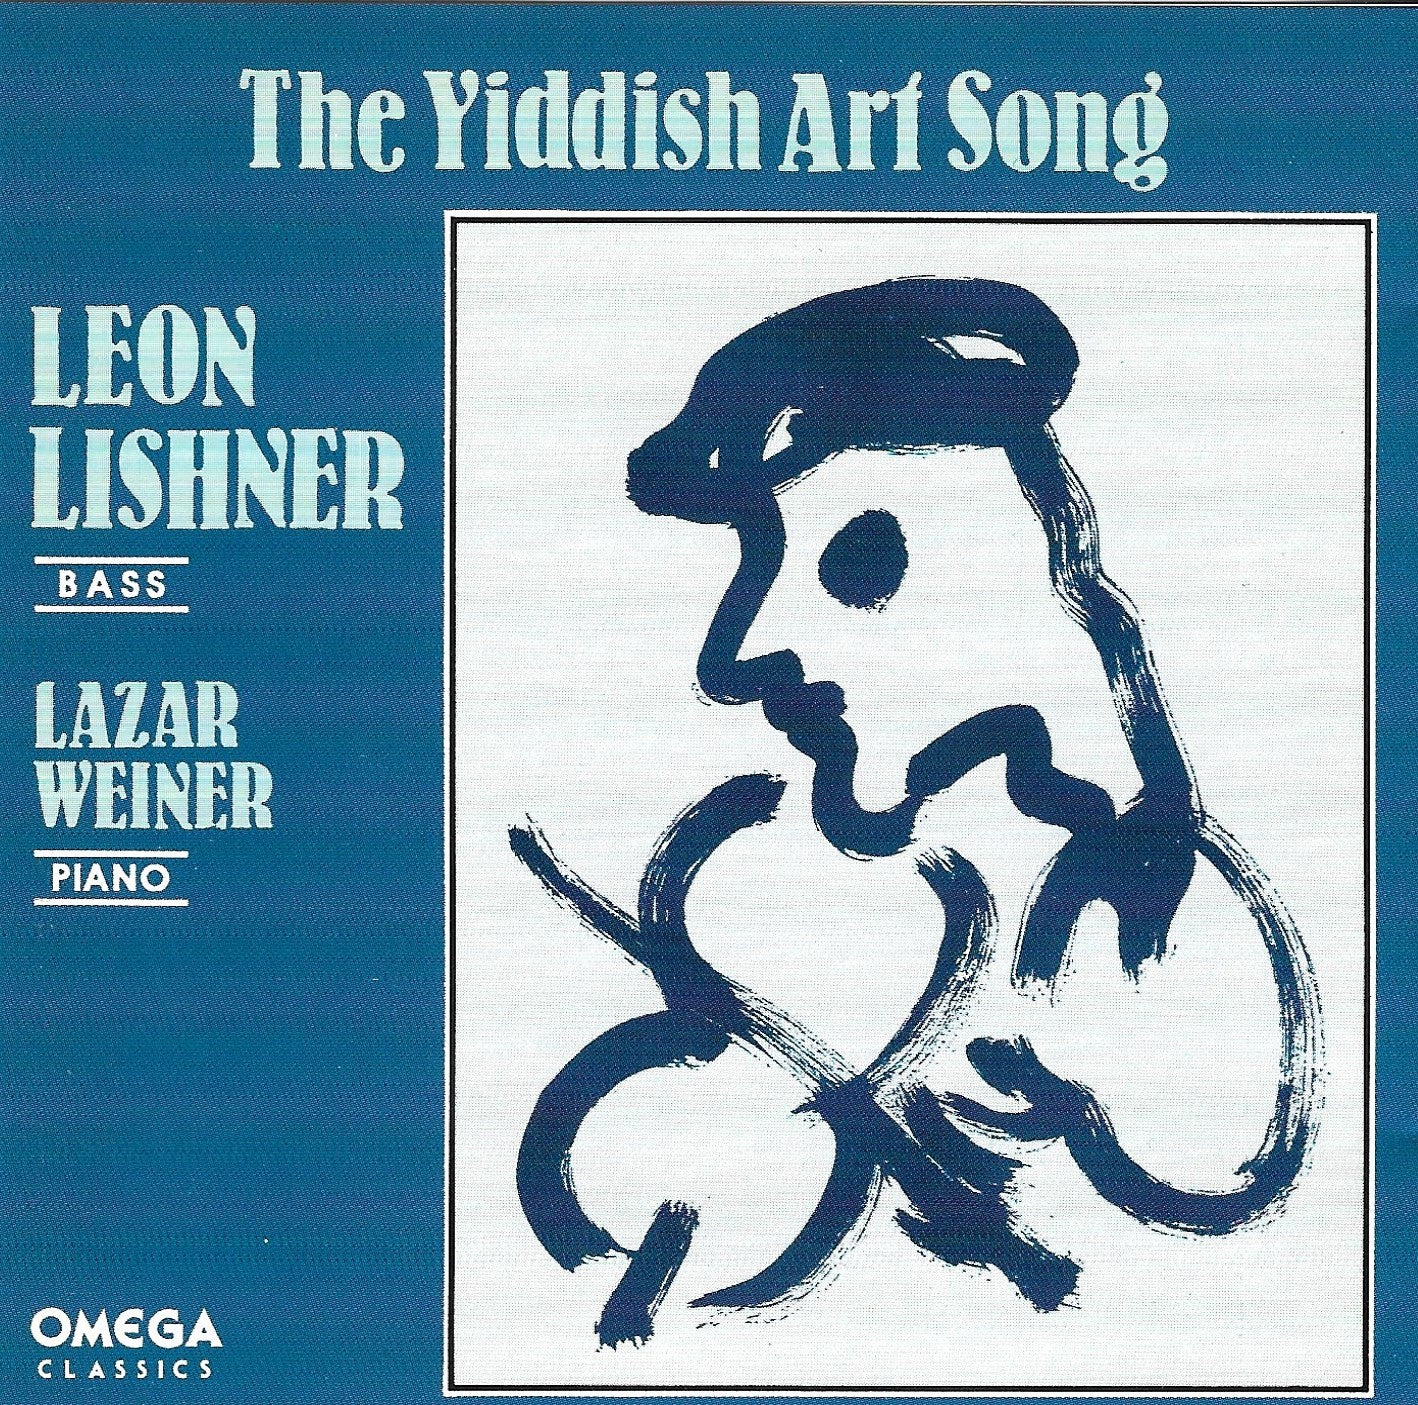 THE YIDDISH ART SONG - Leon Lishner, bass; Lazar Weiner, piano